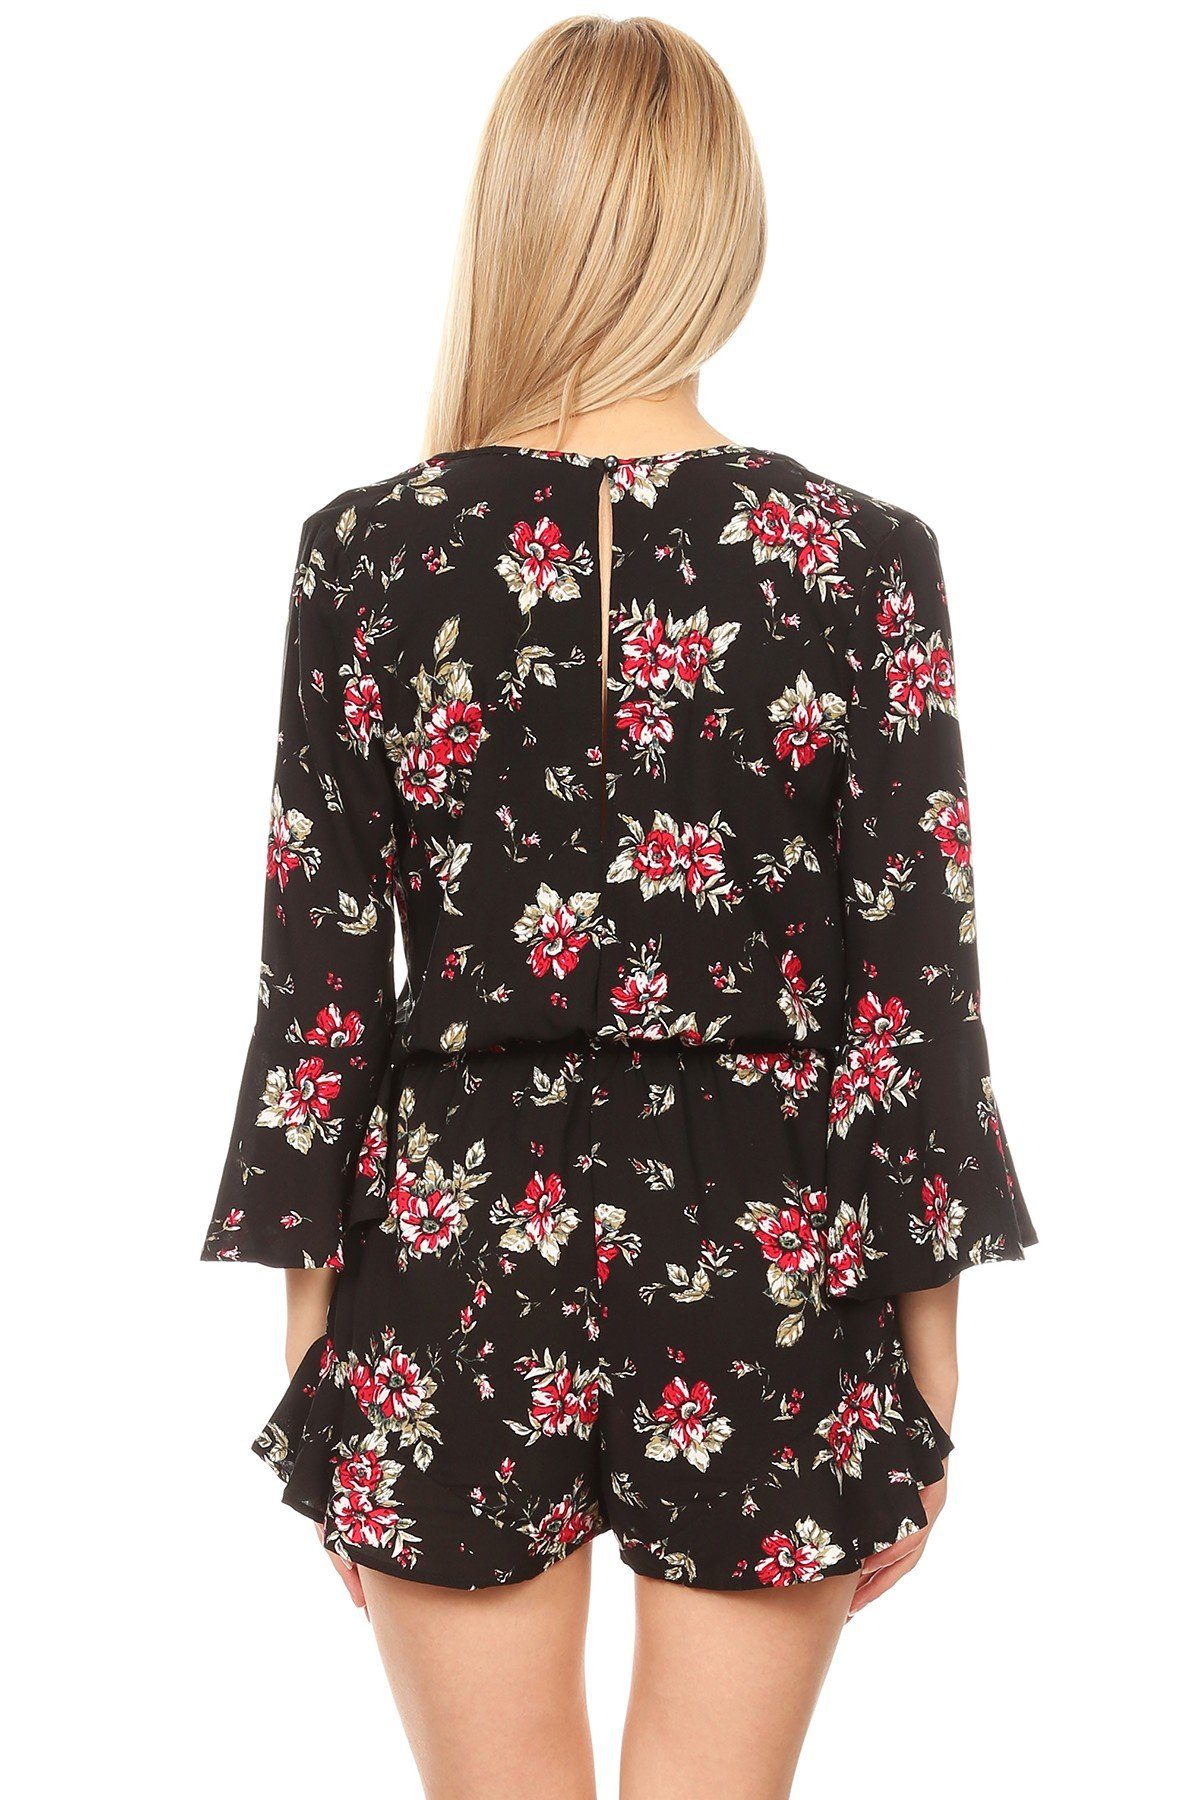 Patterned Shorts - Black/floral - Ladies